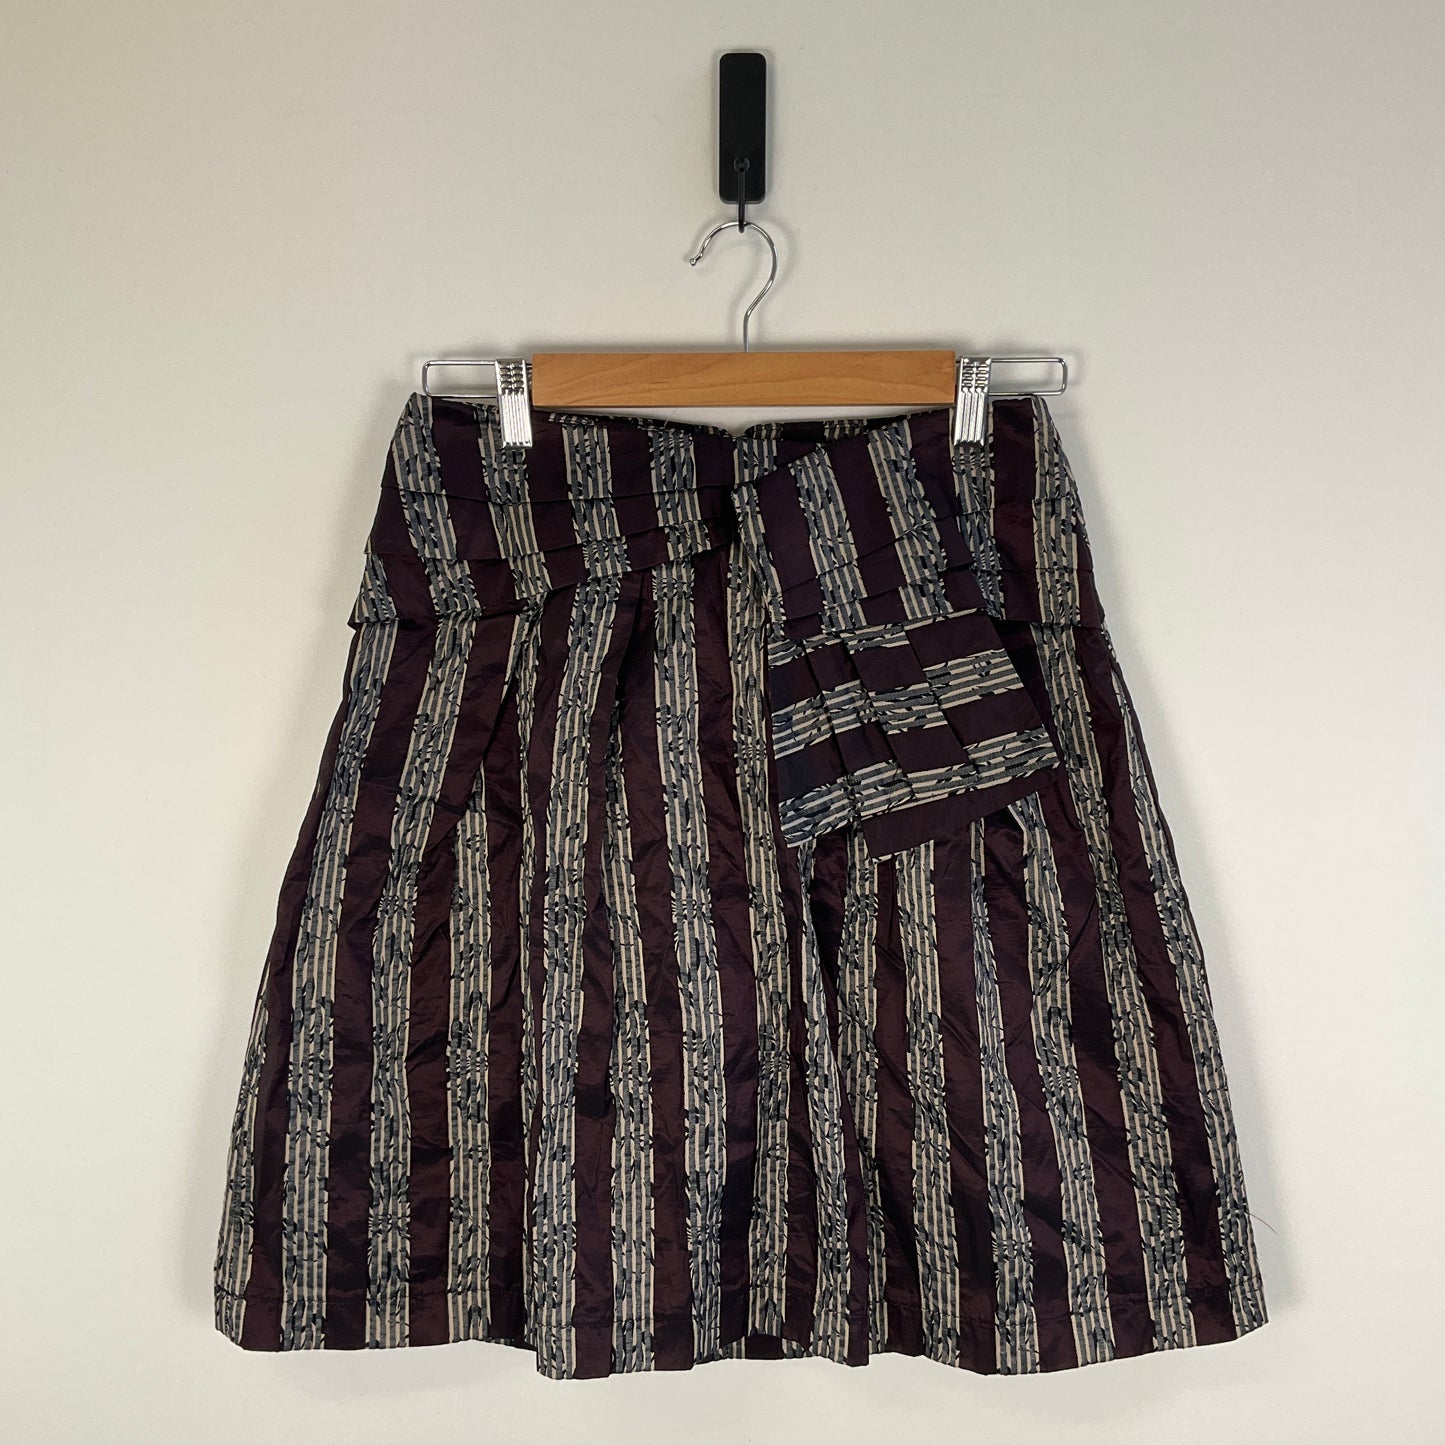 Cue - Skirt